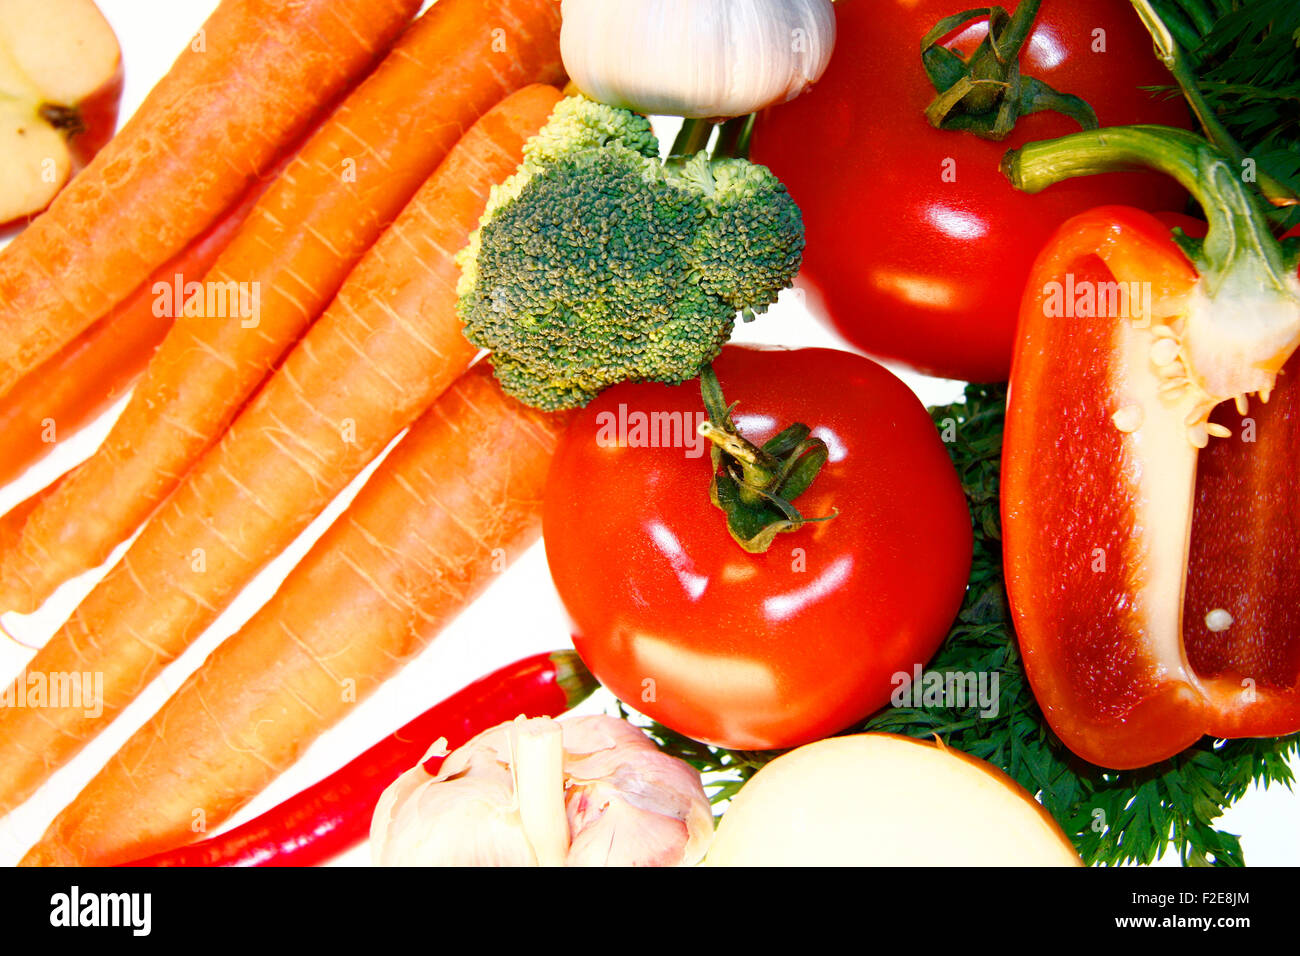 Karotten/ Mohrrueben, Brokkoli, Apfel, pomodori, Knoblauch, Paprika-Schote, Zwiebel - Symbolbild Nahrungsmittel. Foto Stock